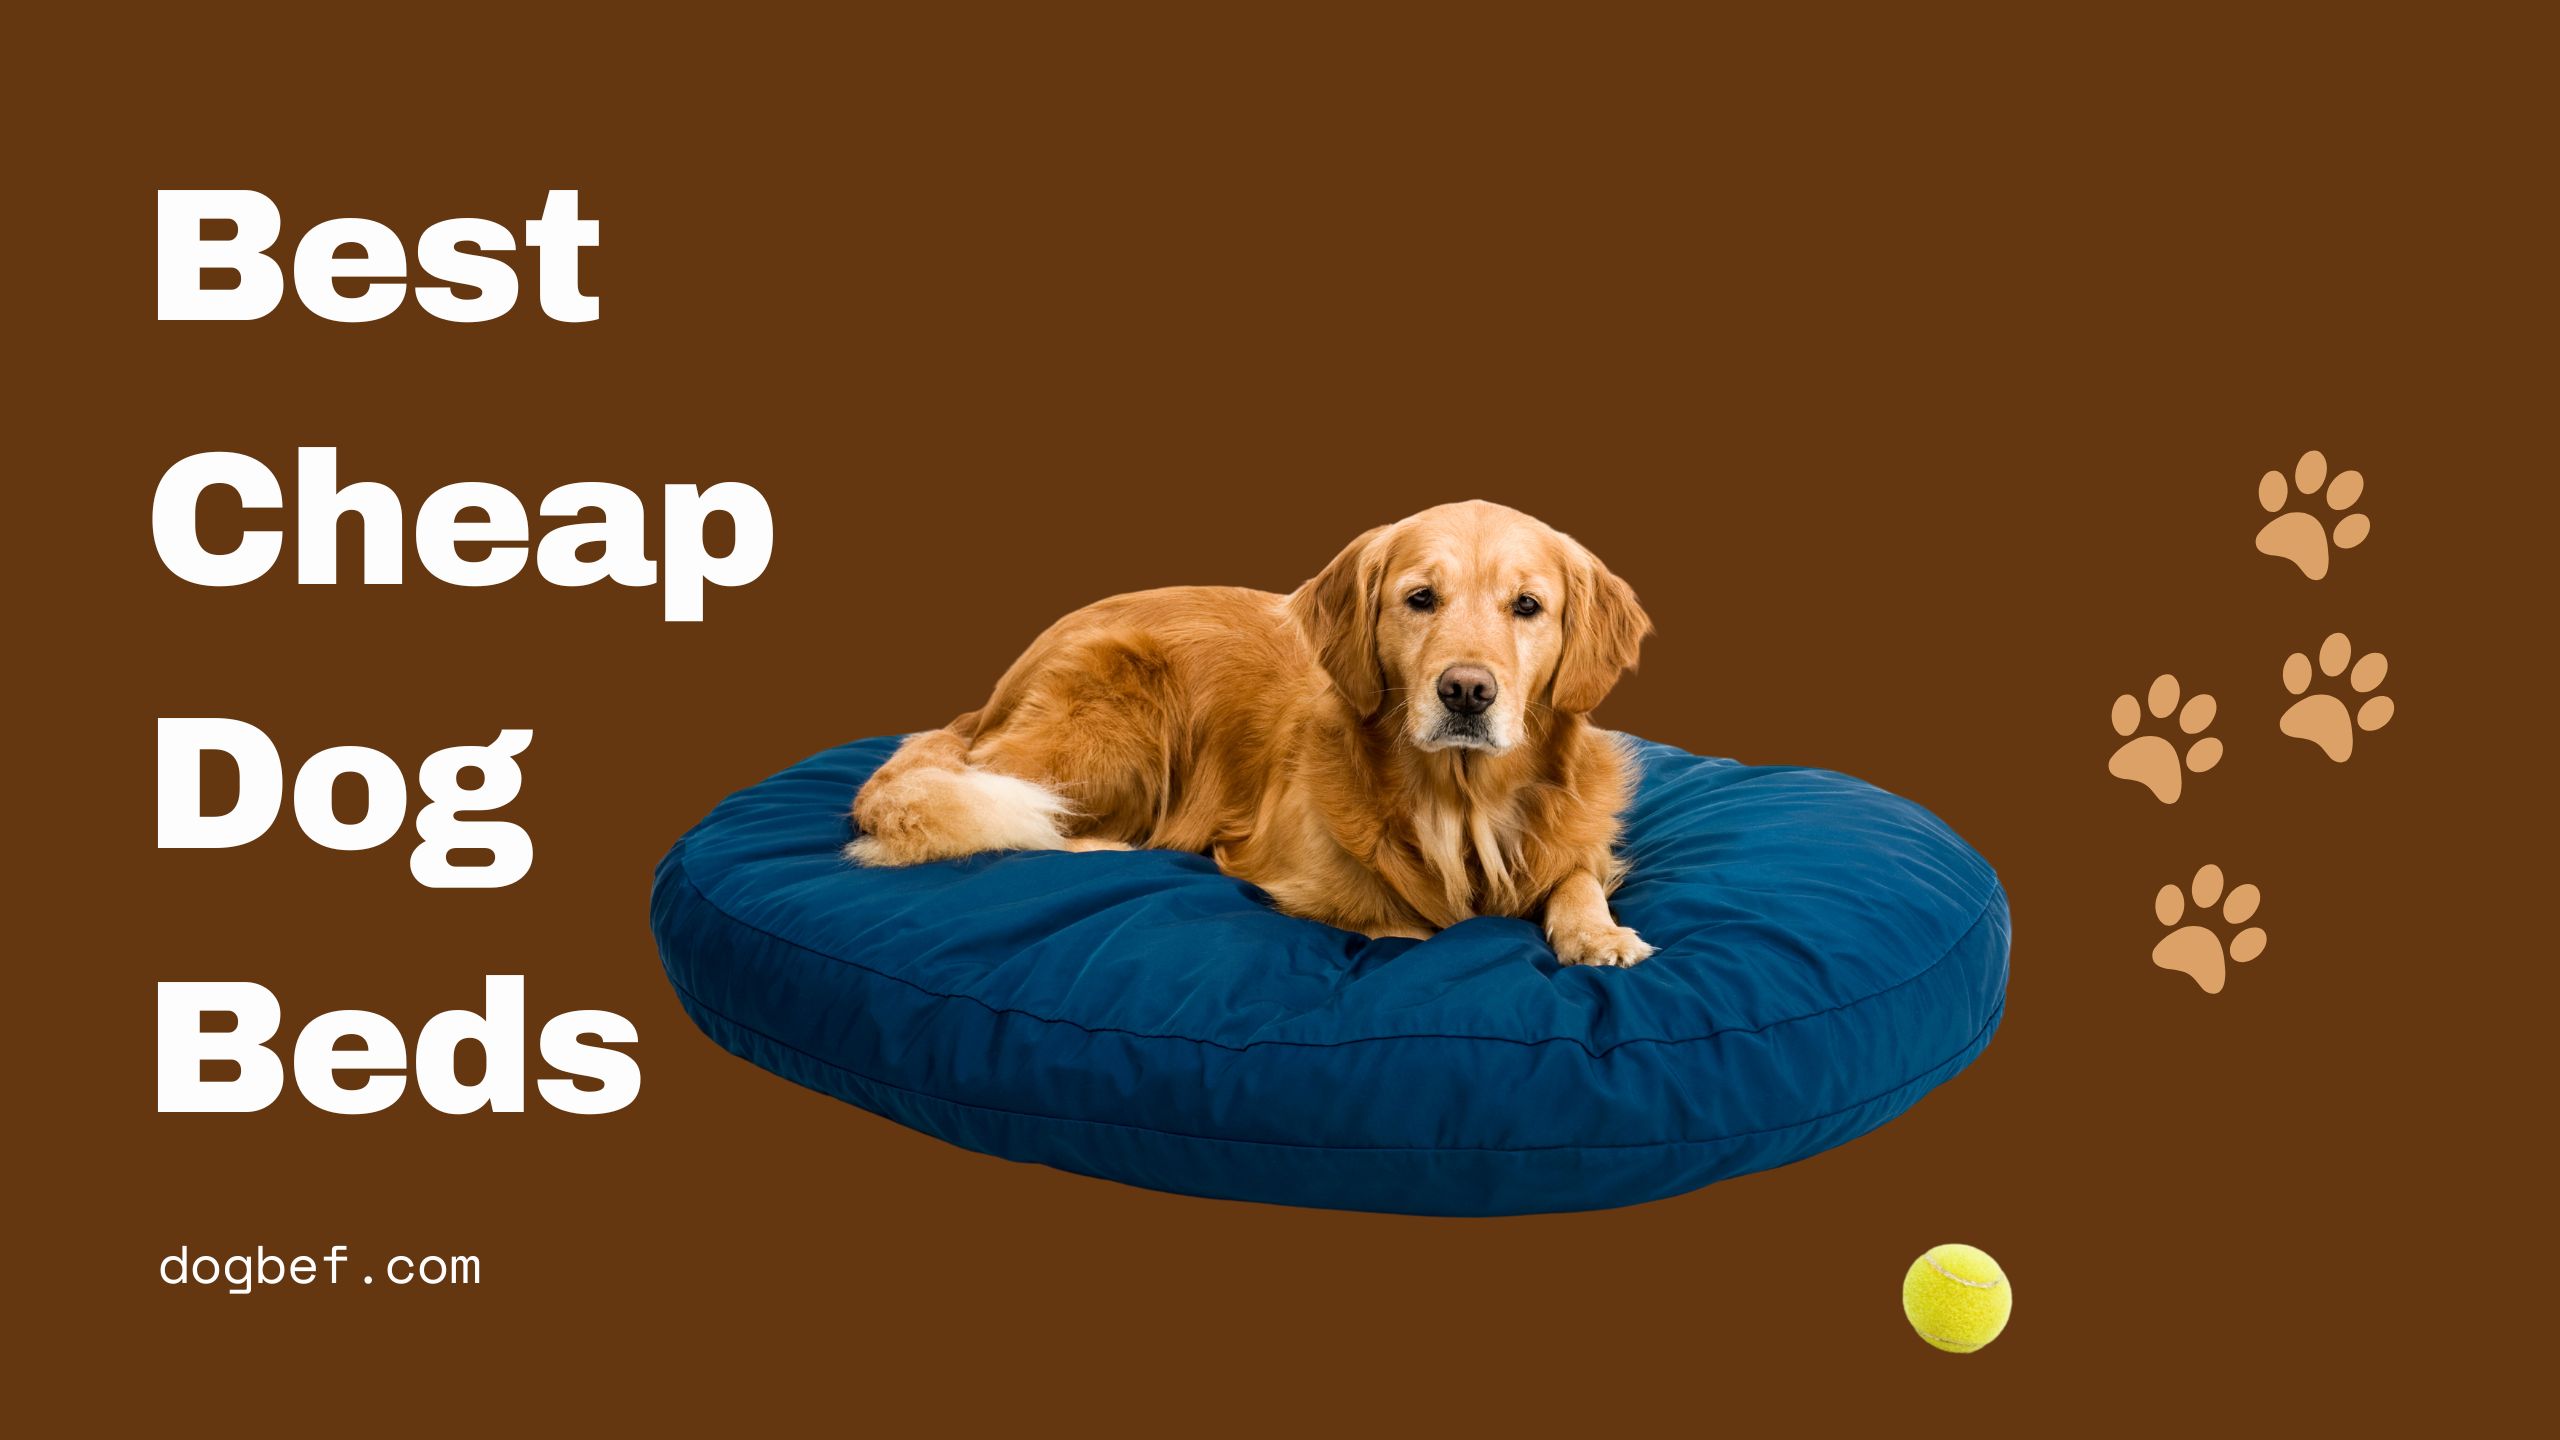 Best Cheap Dog Beds, Affordable dog beds